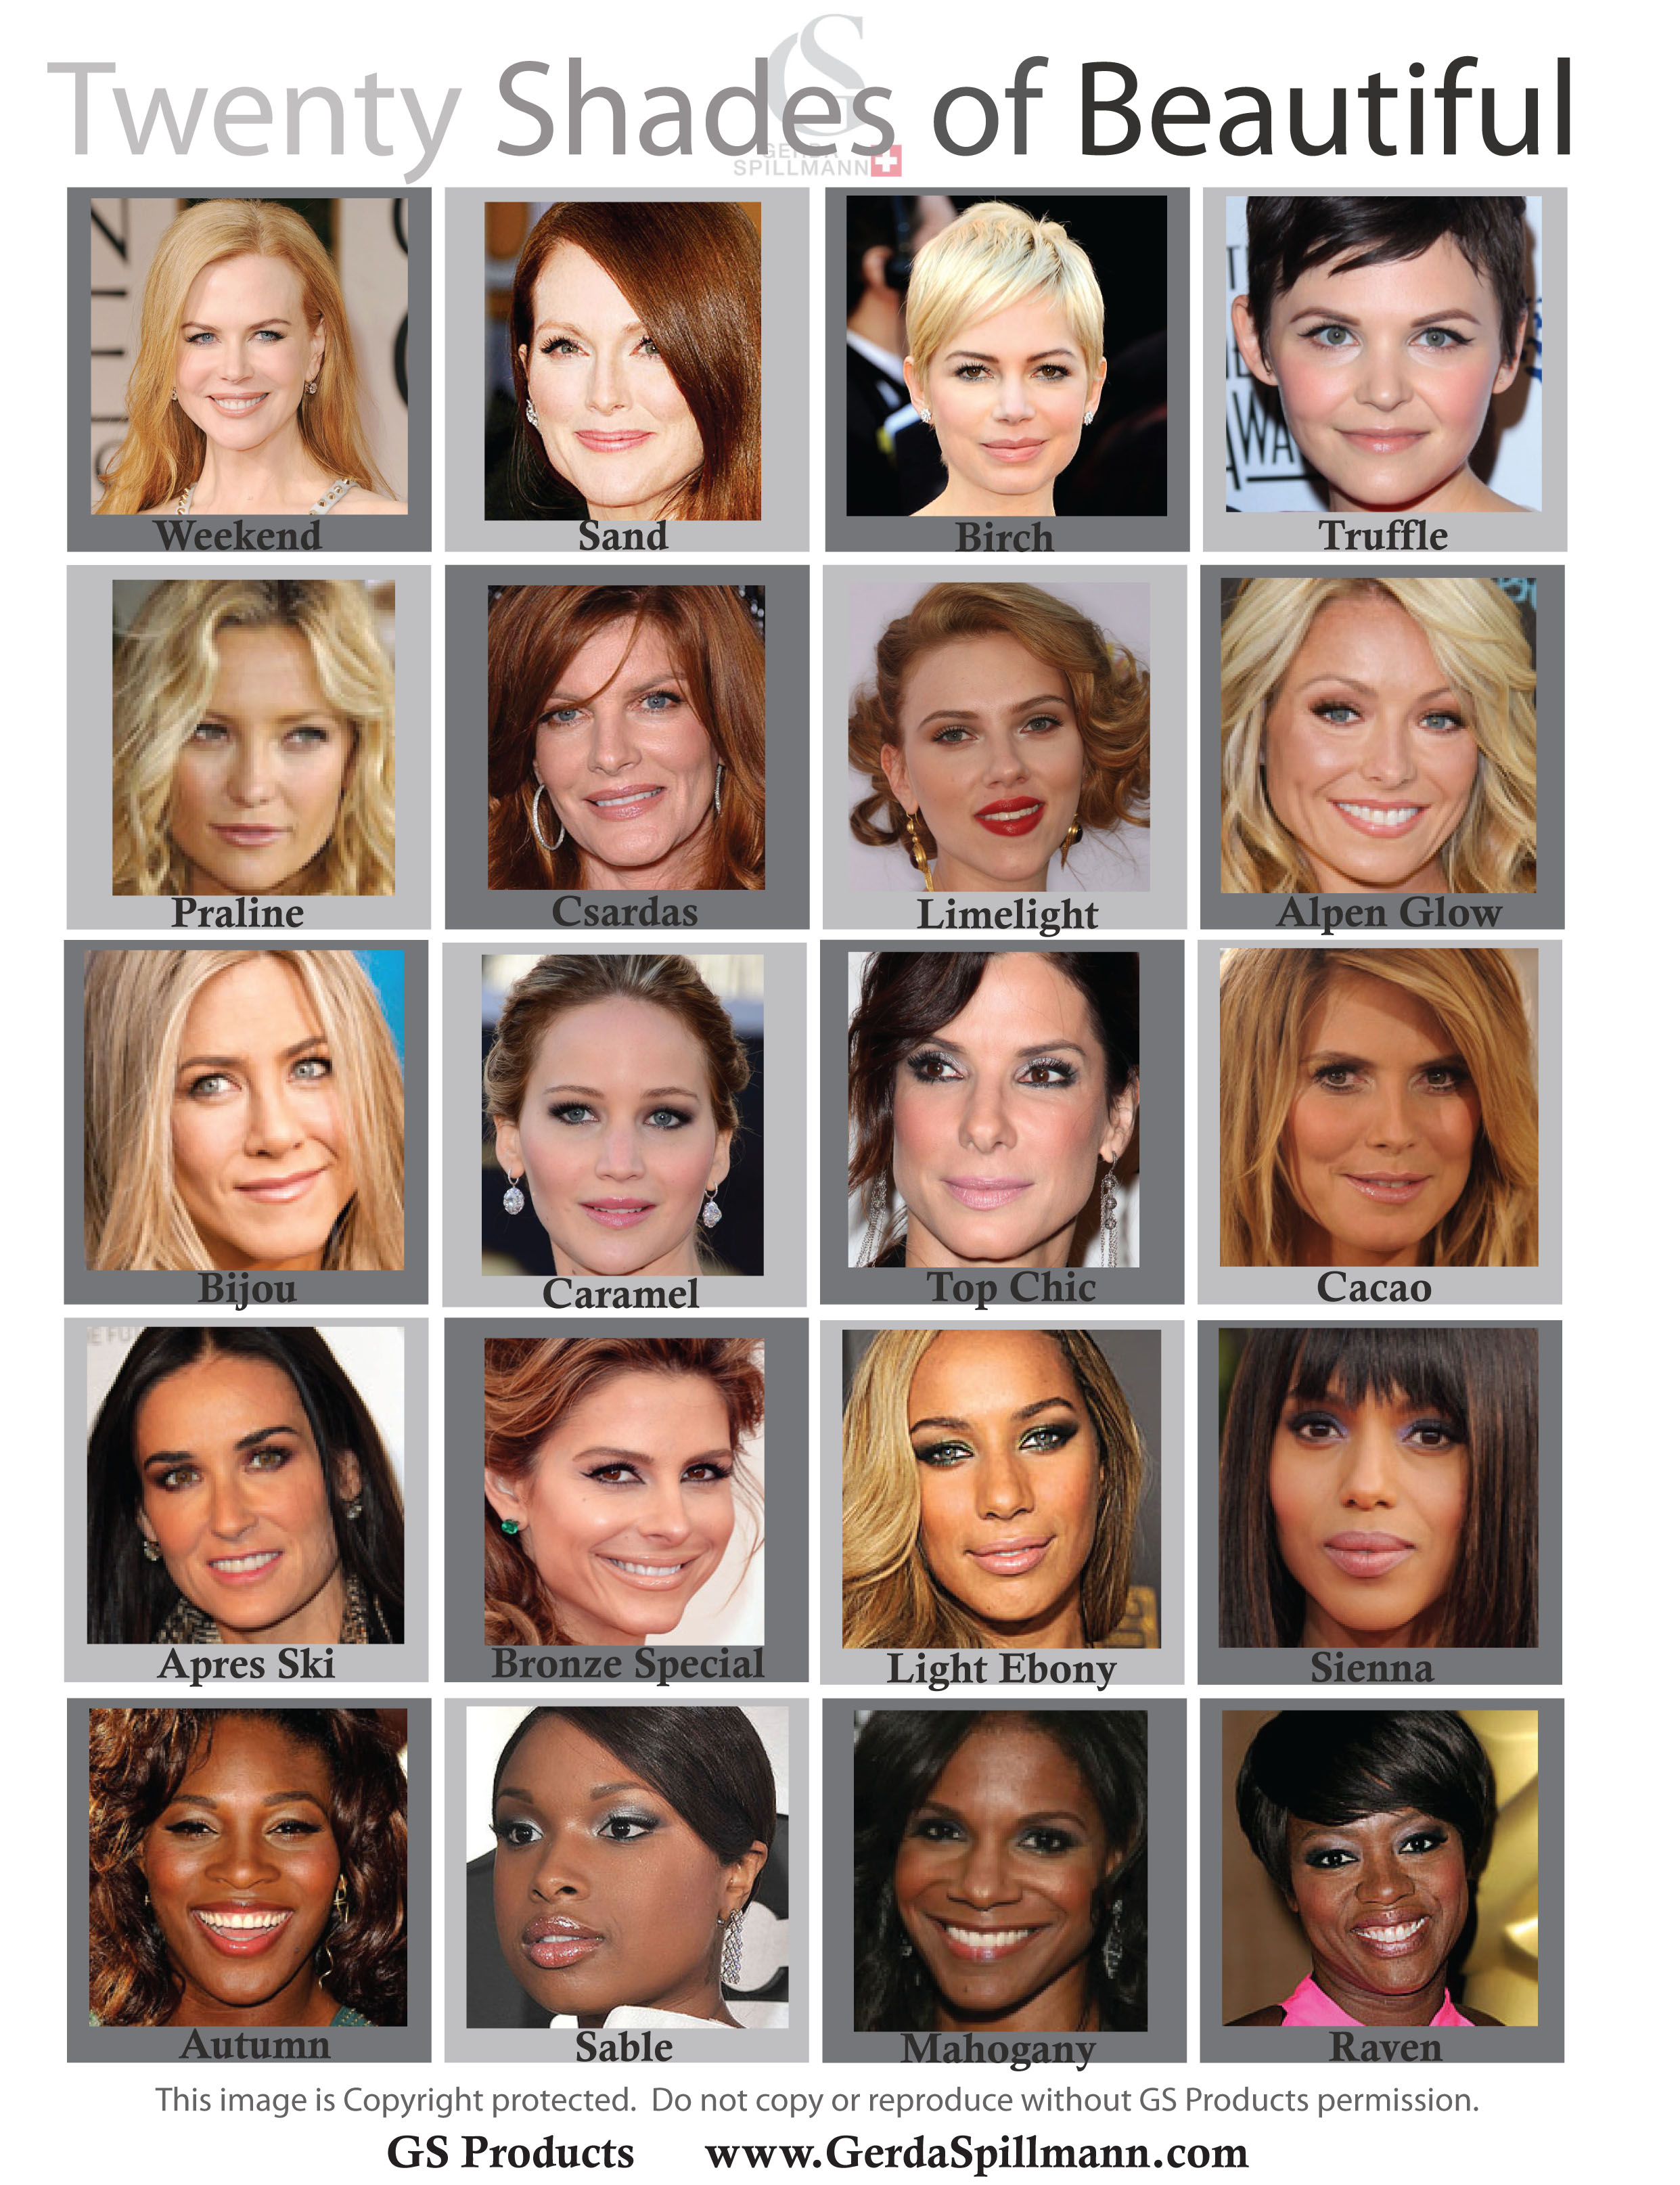 Makeup Skin Color Chart